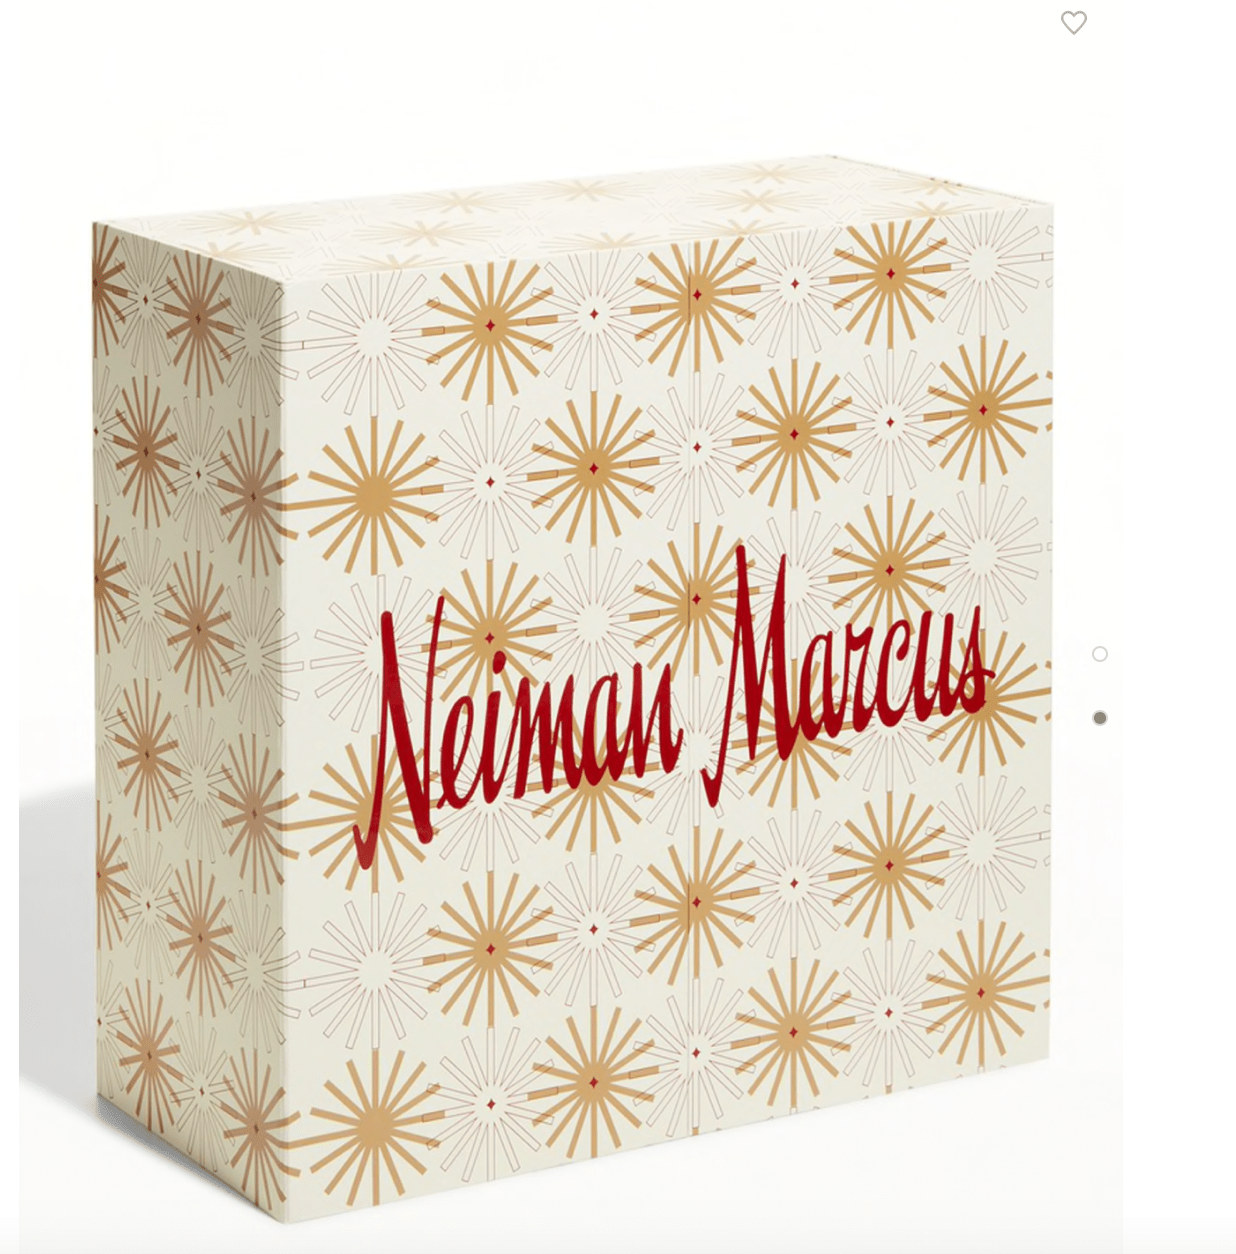 Neiman Marcus Beauty Advent Calendar – Now $120